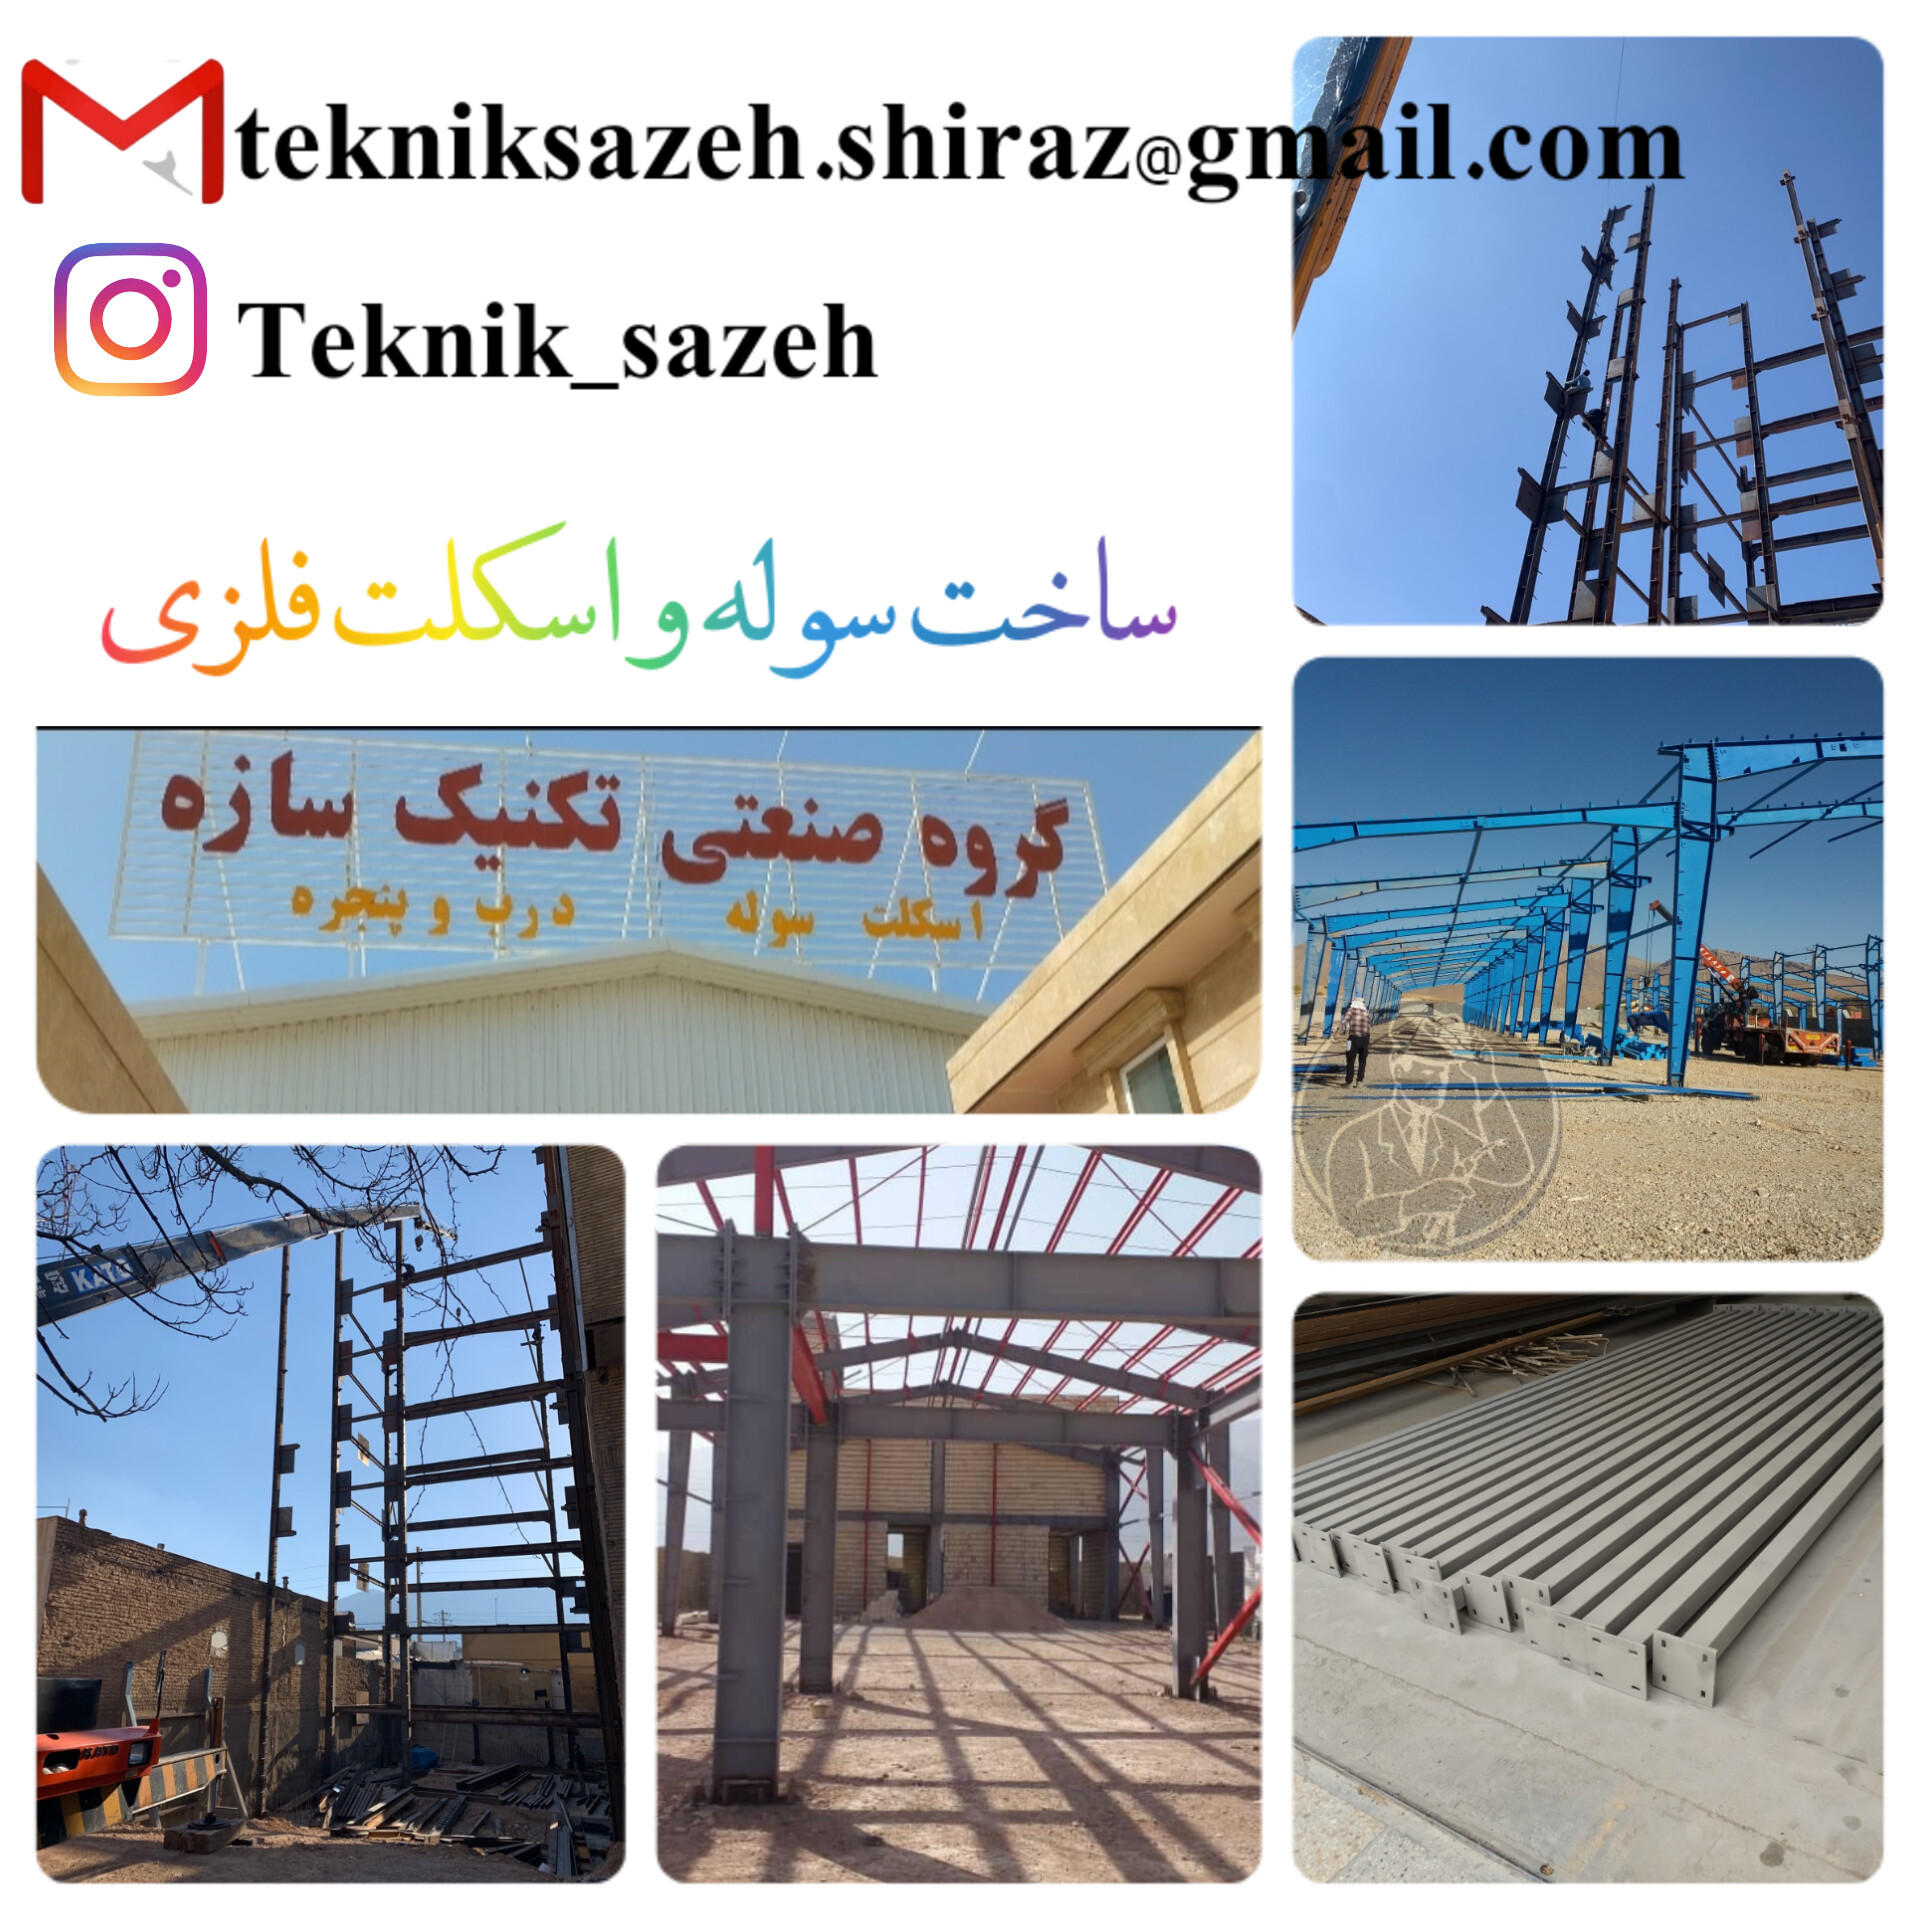 ساخت سوله در شیراز|سوله سازی شیراز گروه صنعتی تکینیک سازه 09920877001